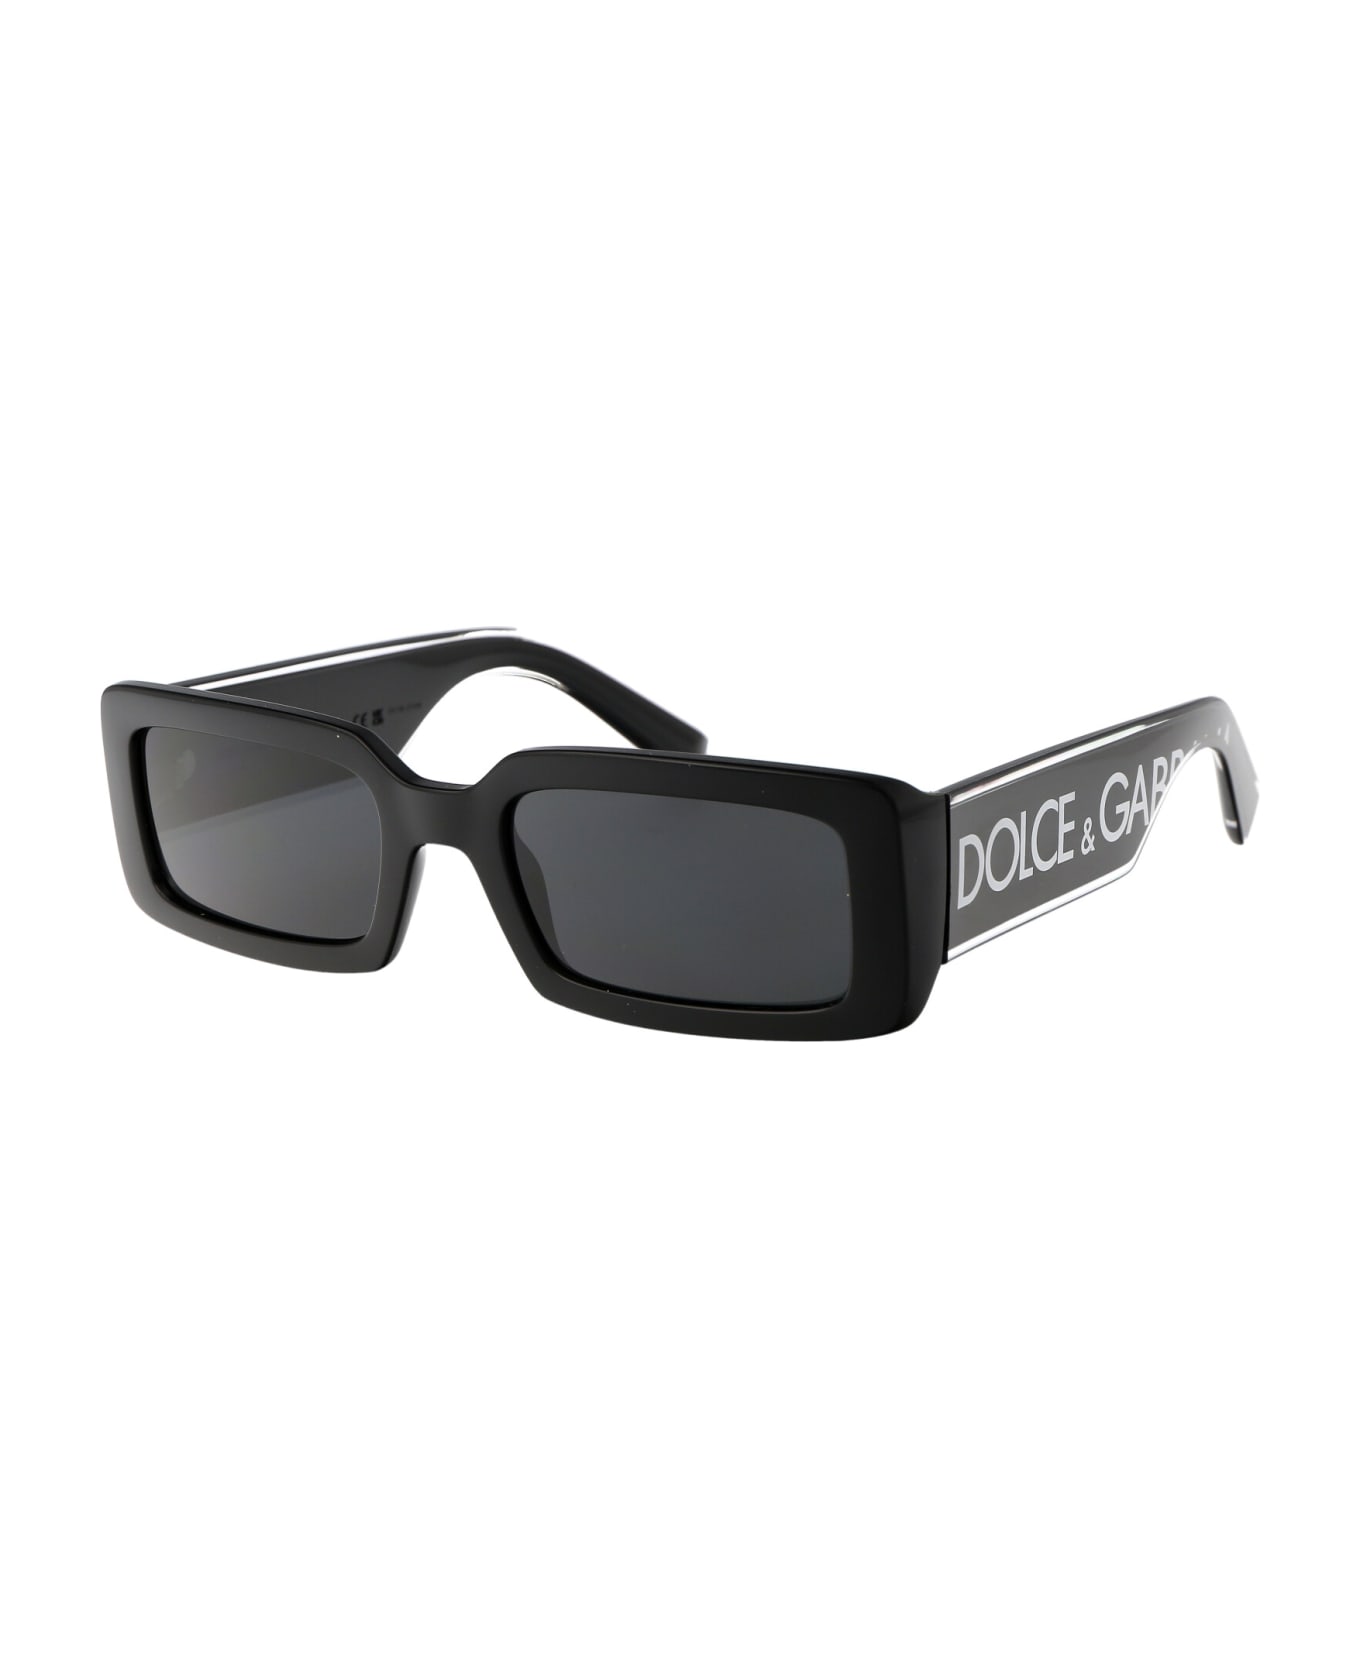 Dolce & Gabbana Eyewear 0dg6187 Sunglasses - 501/87 BLACK